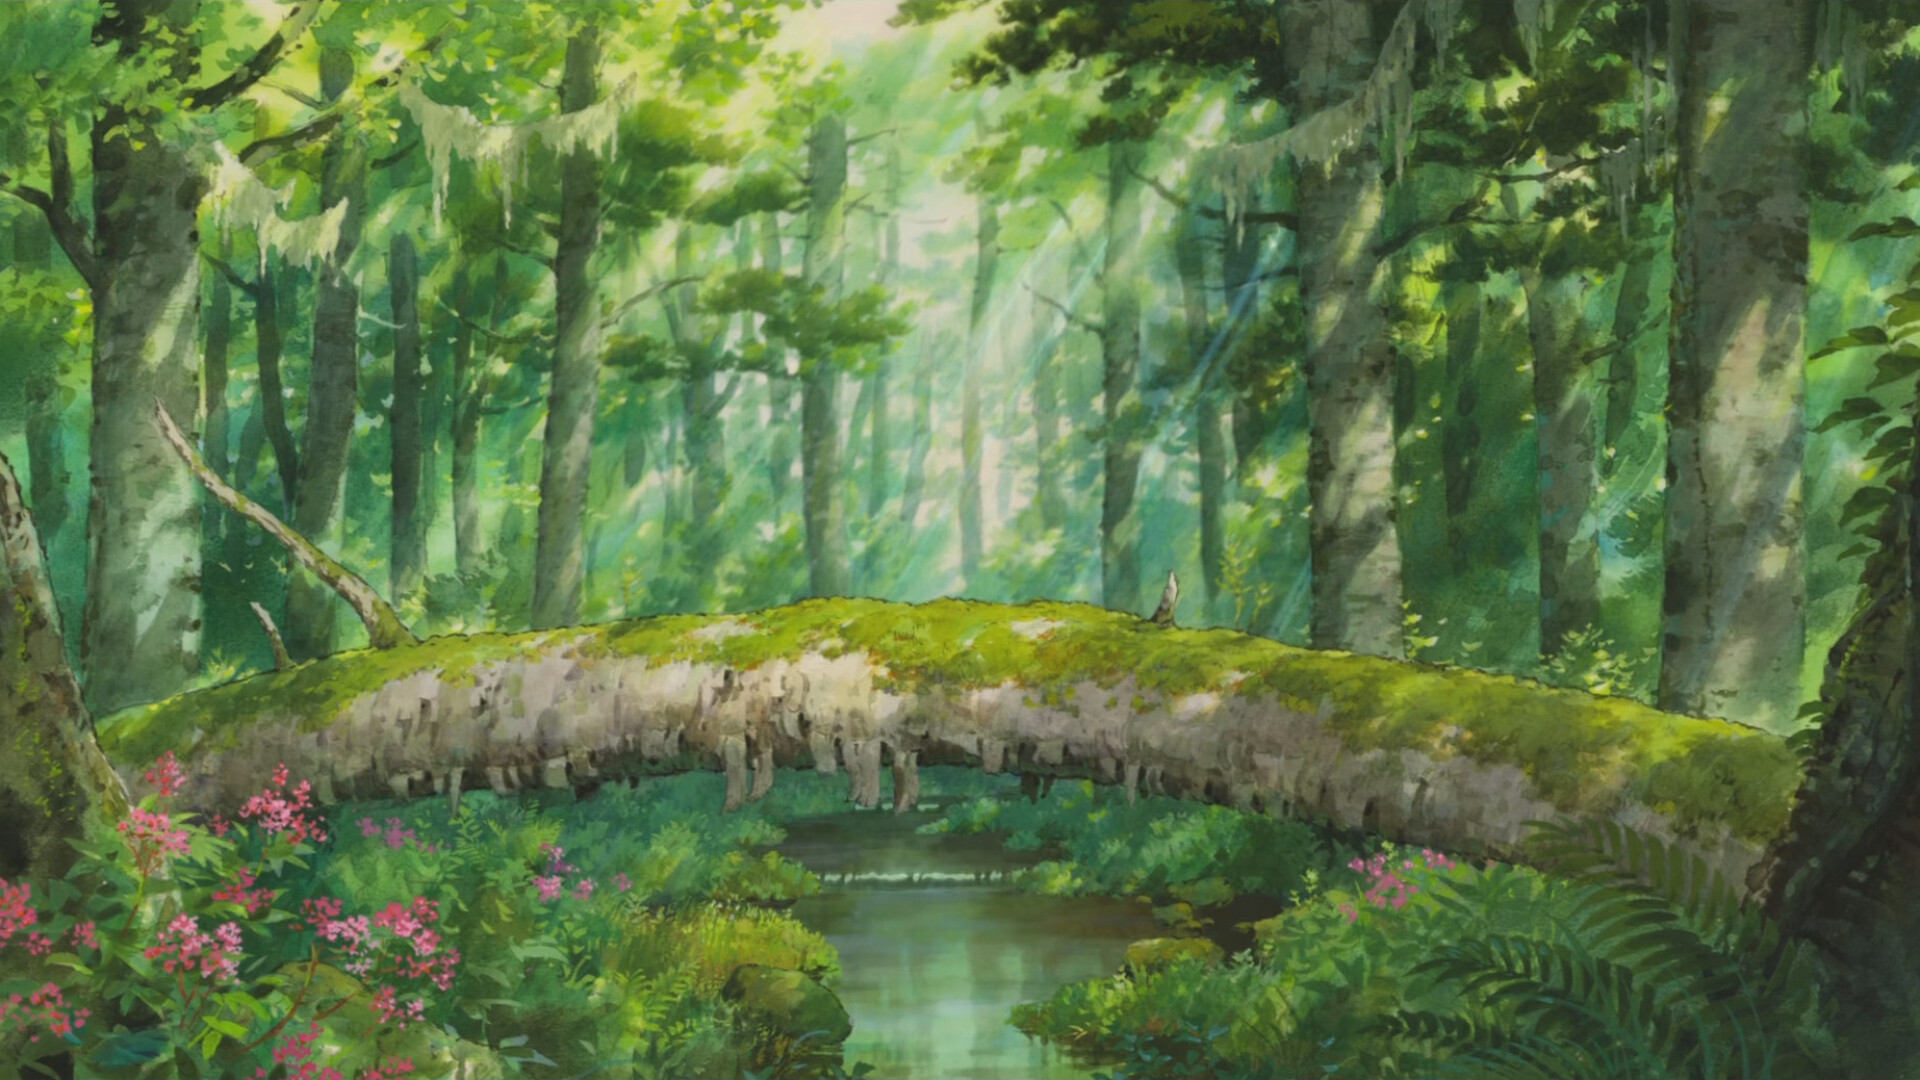 Studio Ghibli: When Marnie Was There, Directed by Hiromasa Yonebayashi. 1920x1080 Full HD Wallpaper.